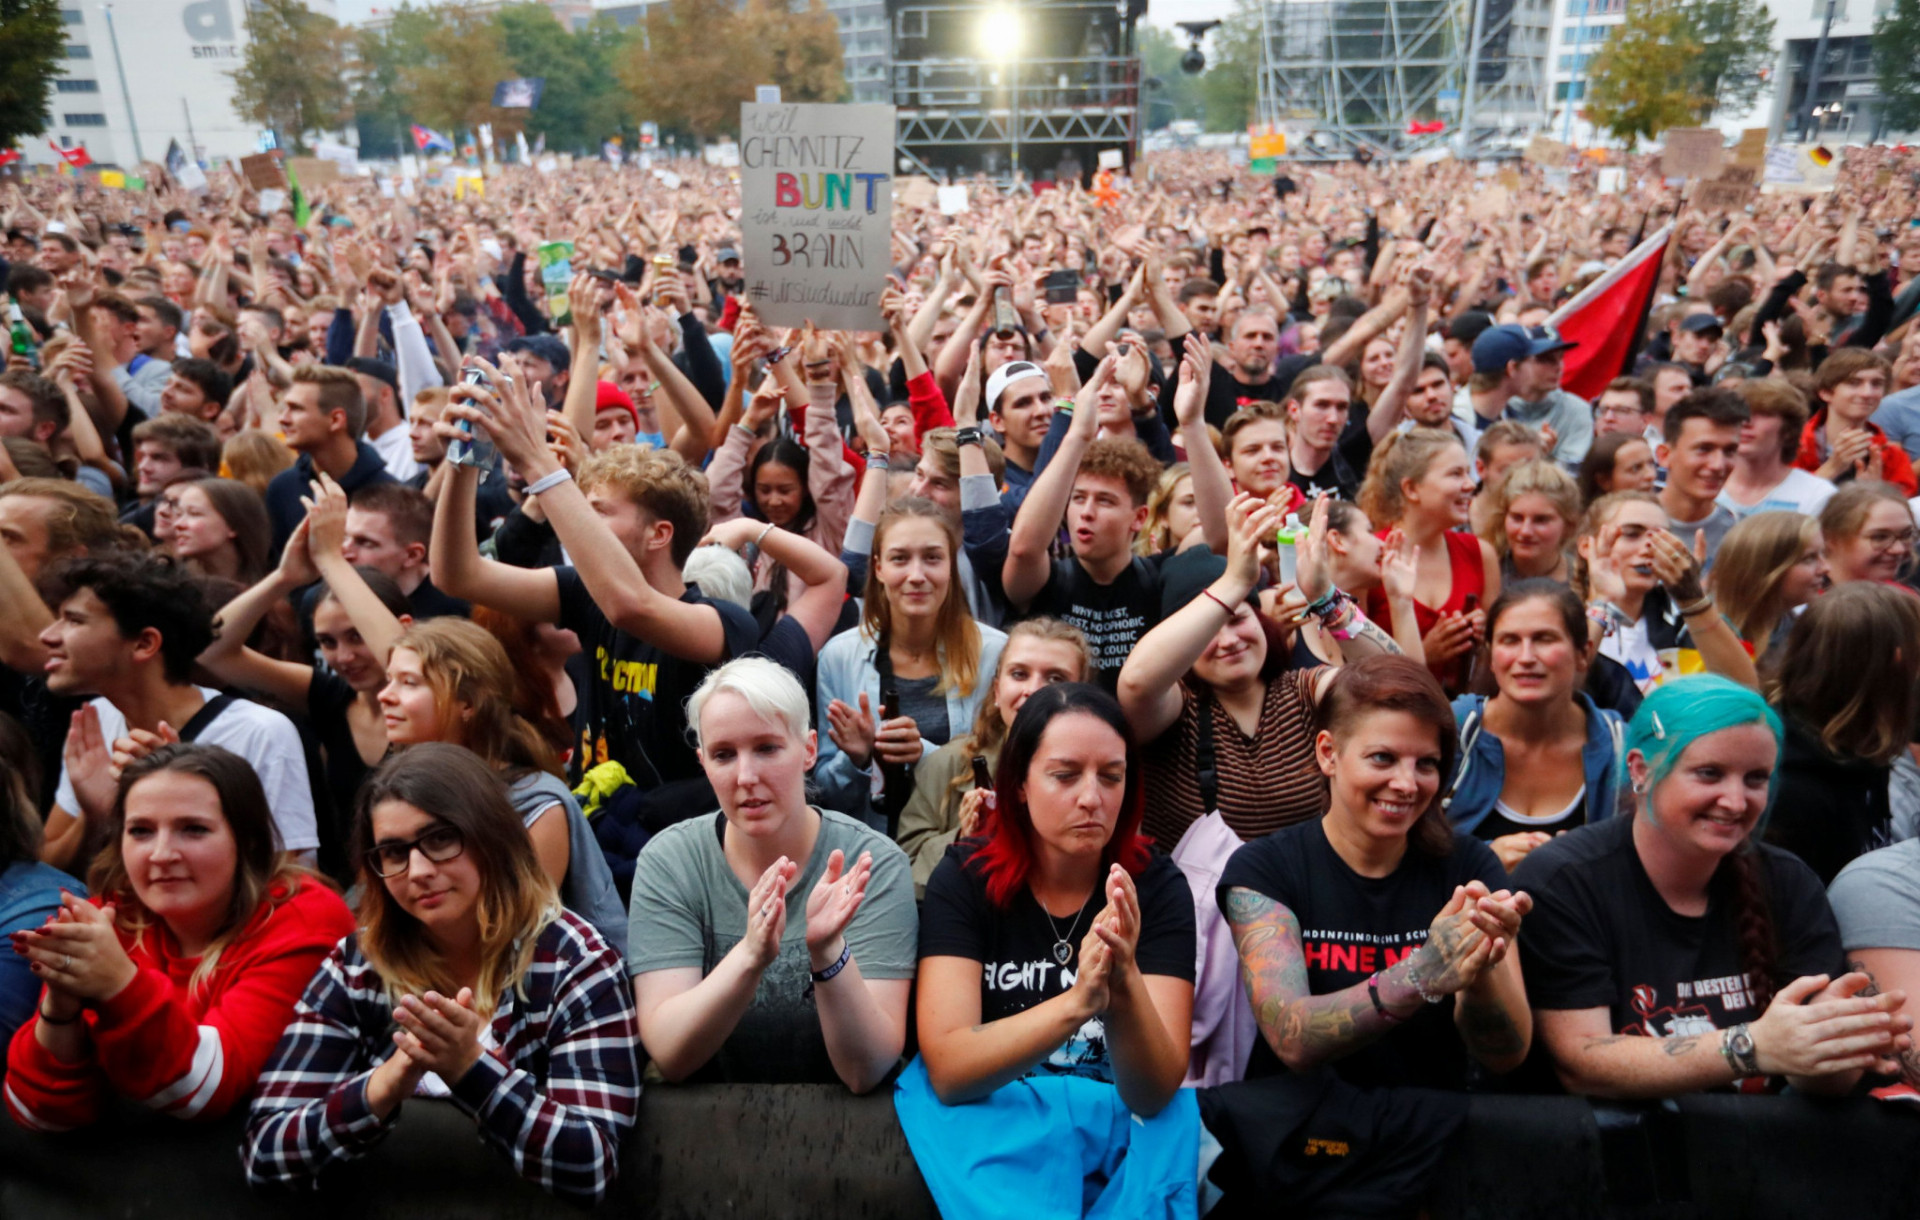  "anti-racism concert" in Chemnitz